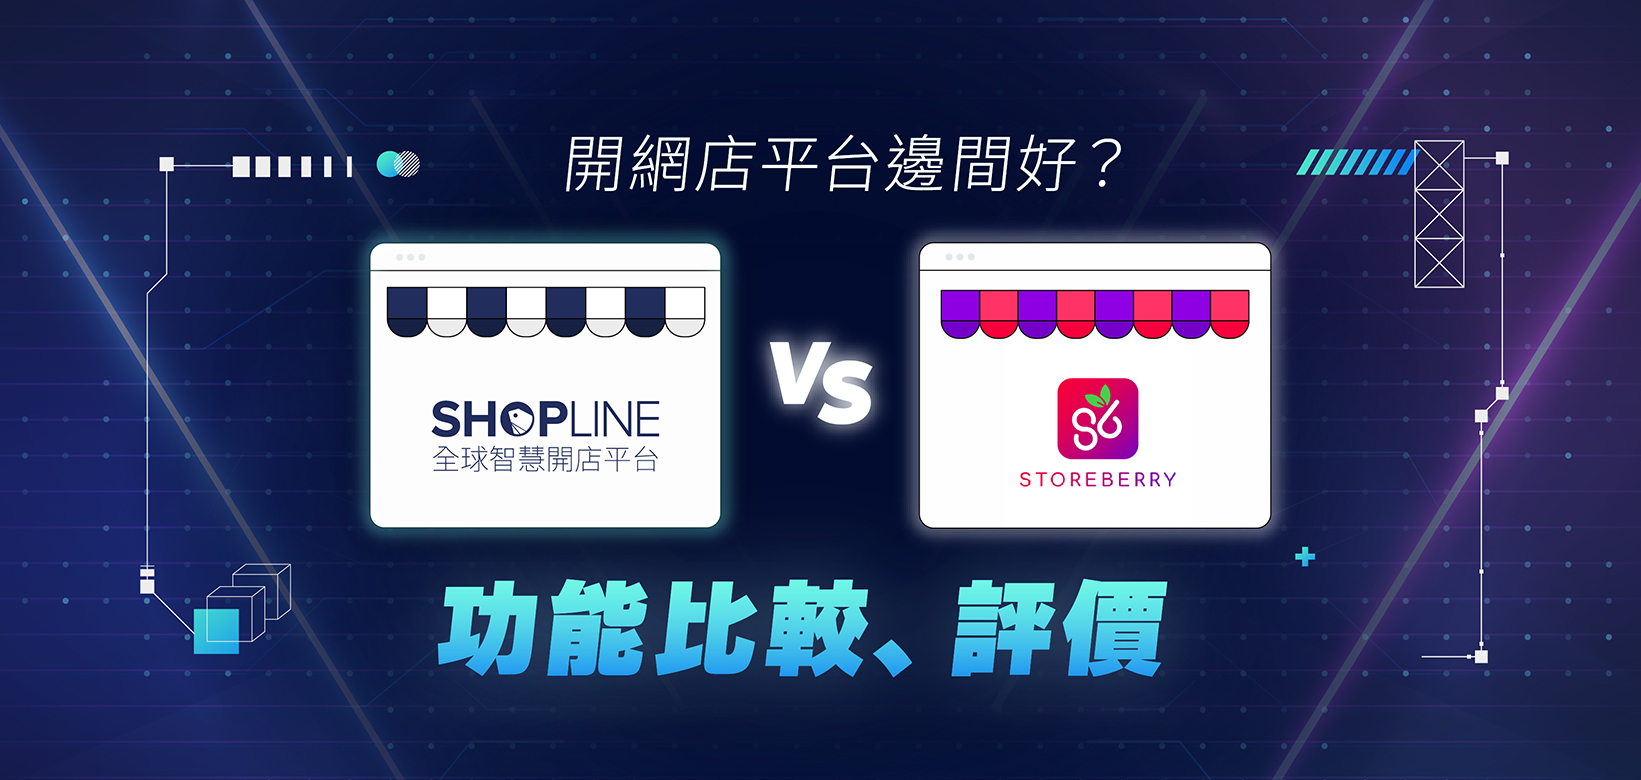 storeberry vs shopline